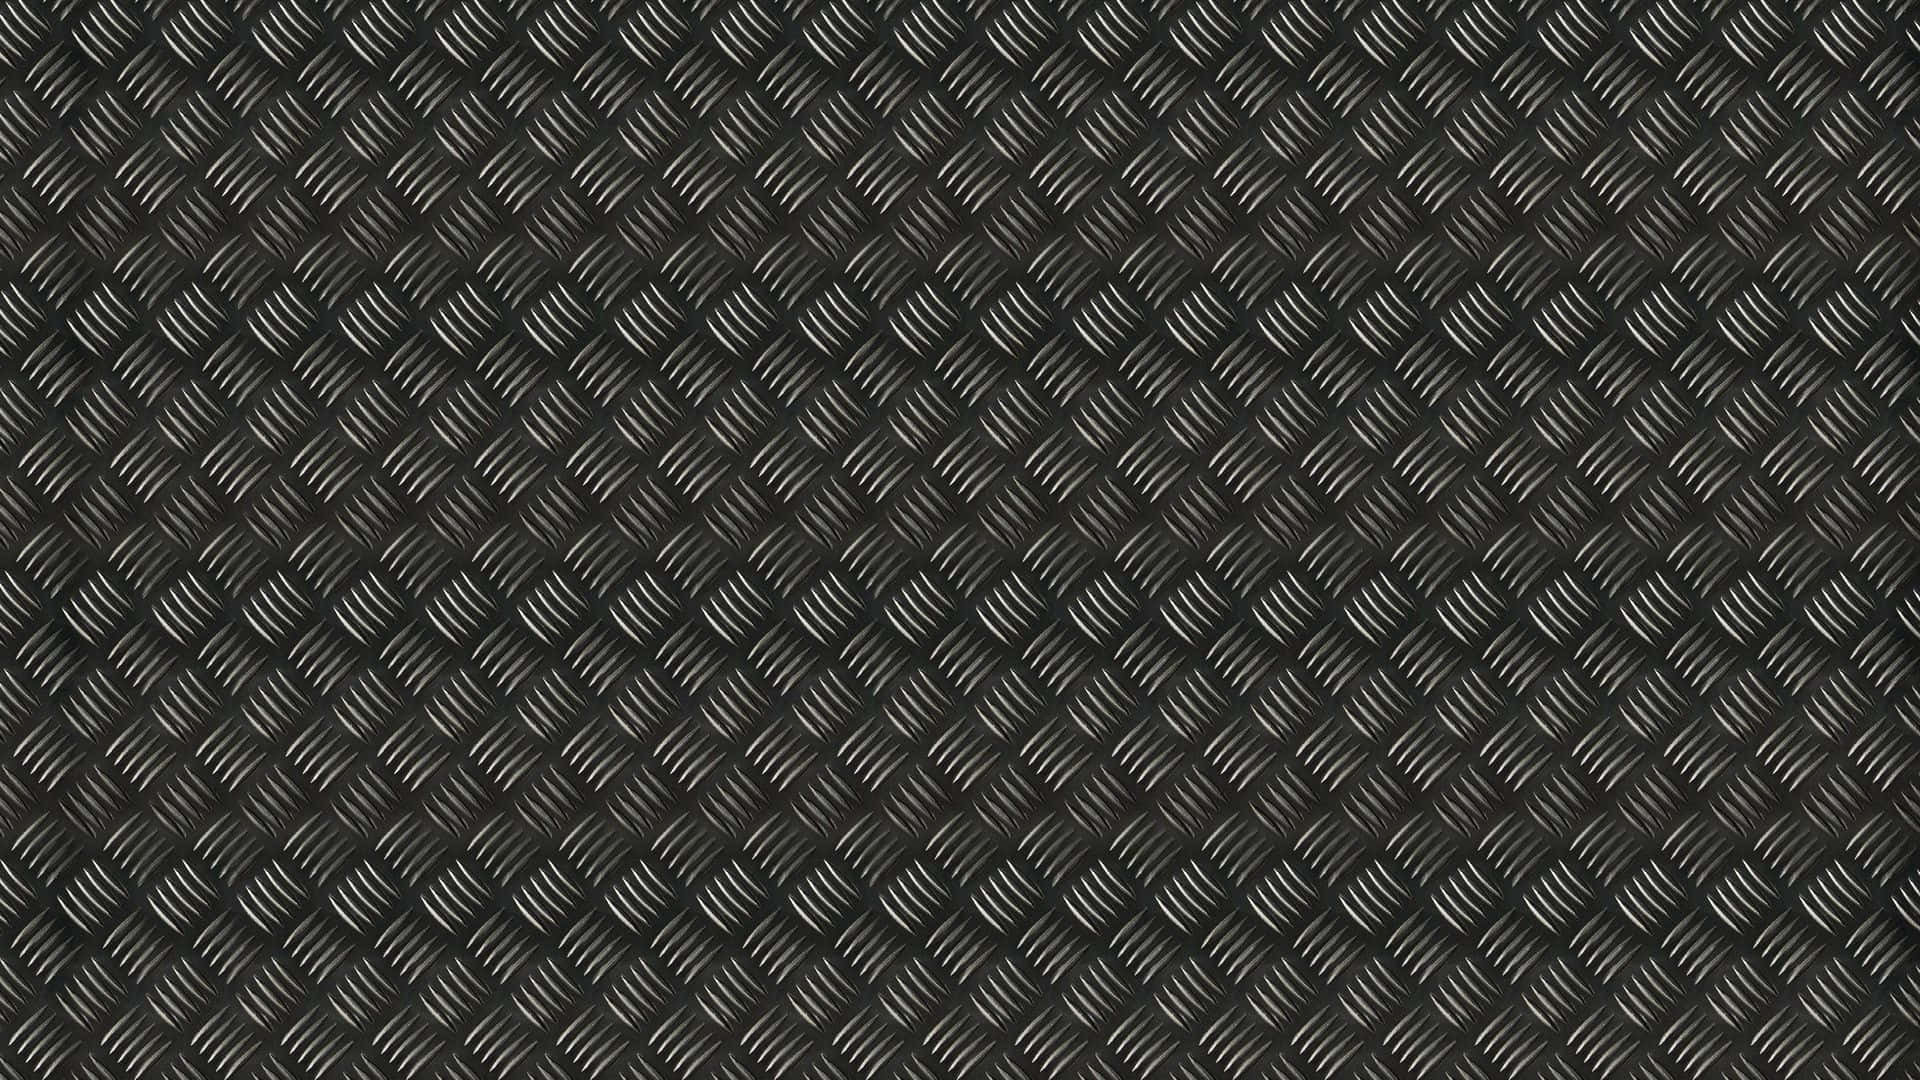 A Black Diamond Pattern Background